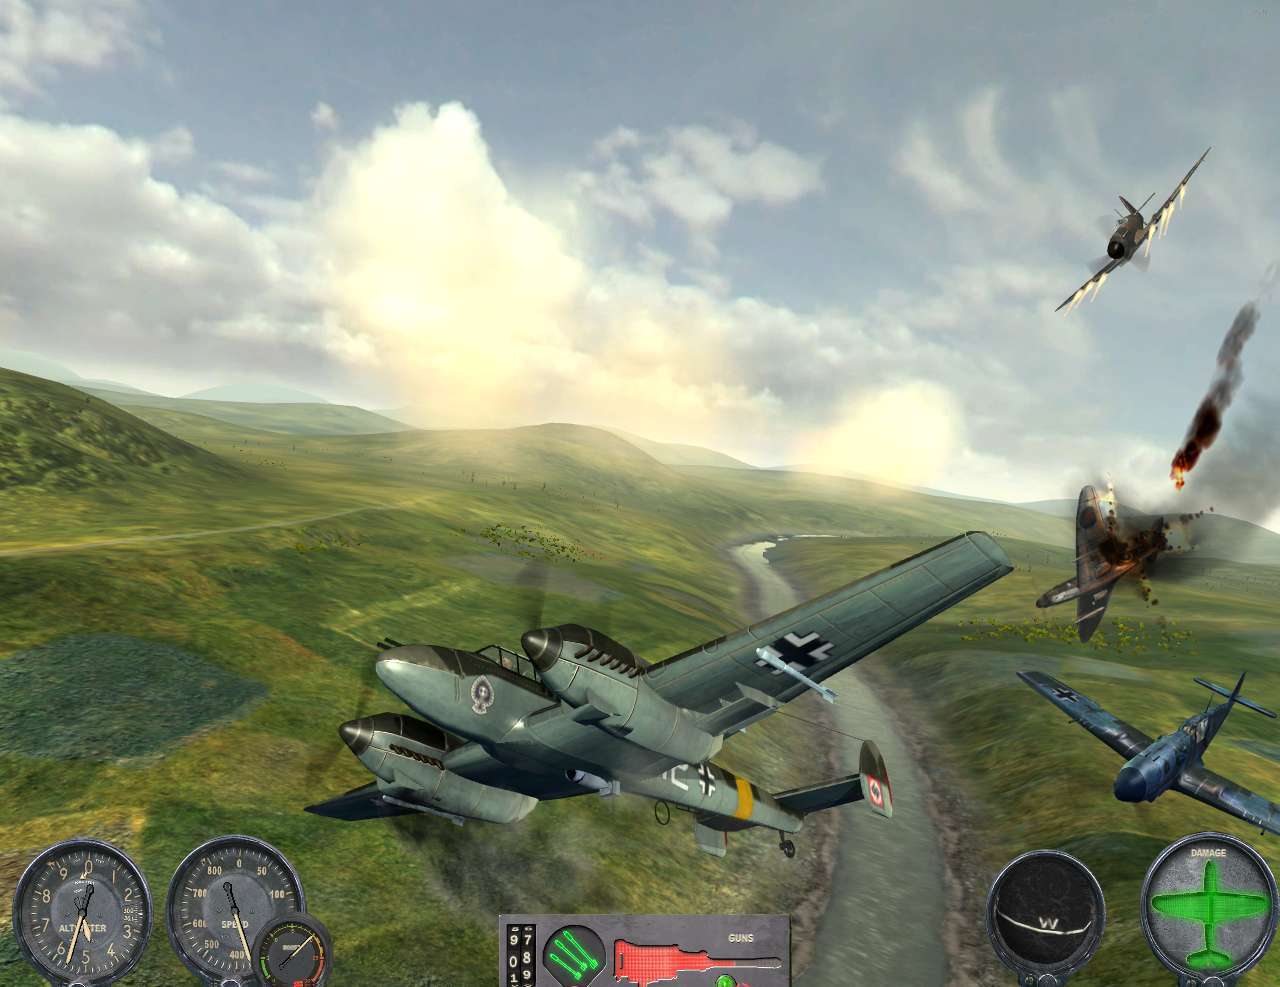 Jogo Pc Combat Wings Simulador Combate Aereo Segunda Guerra